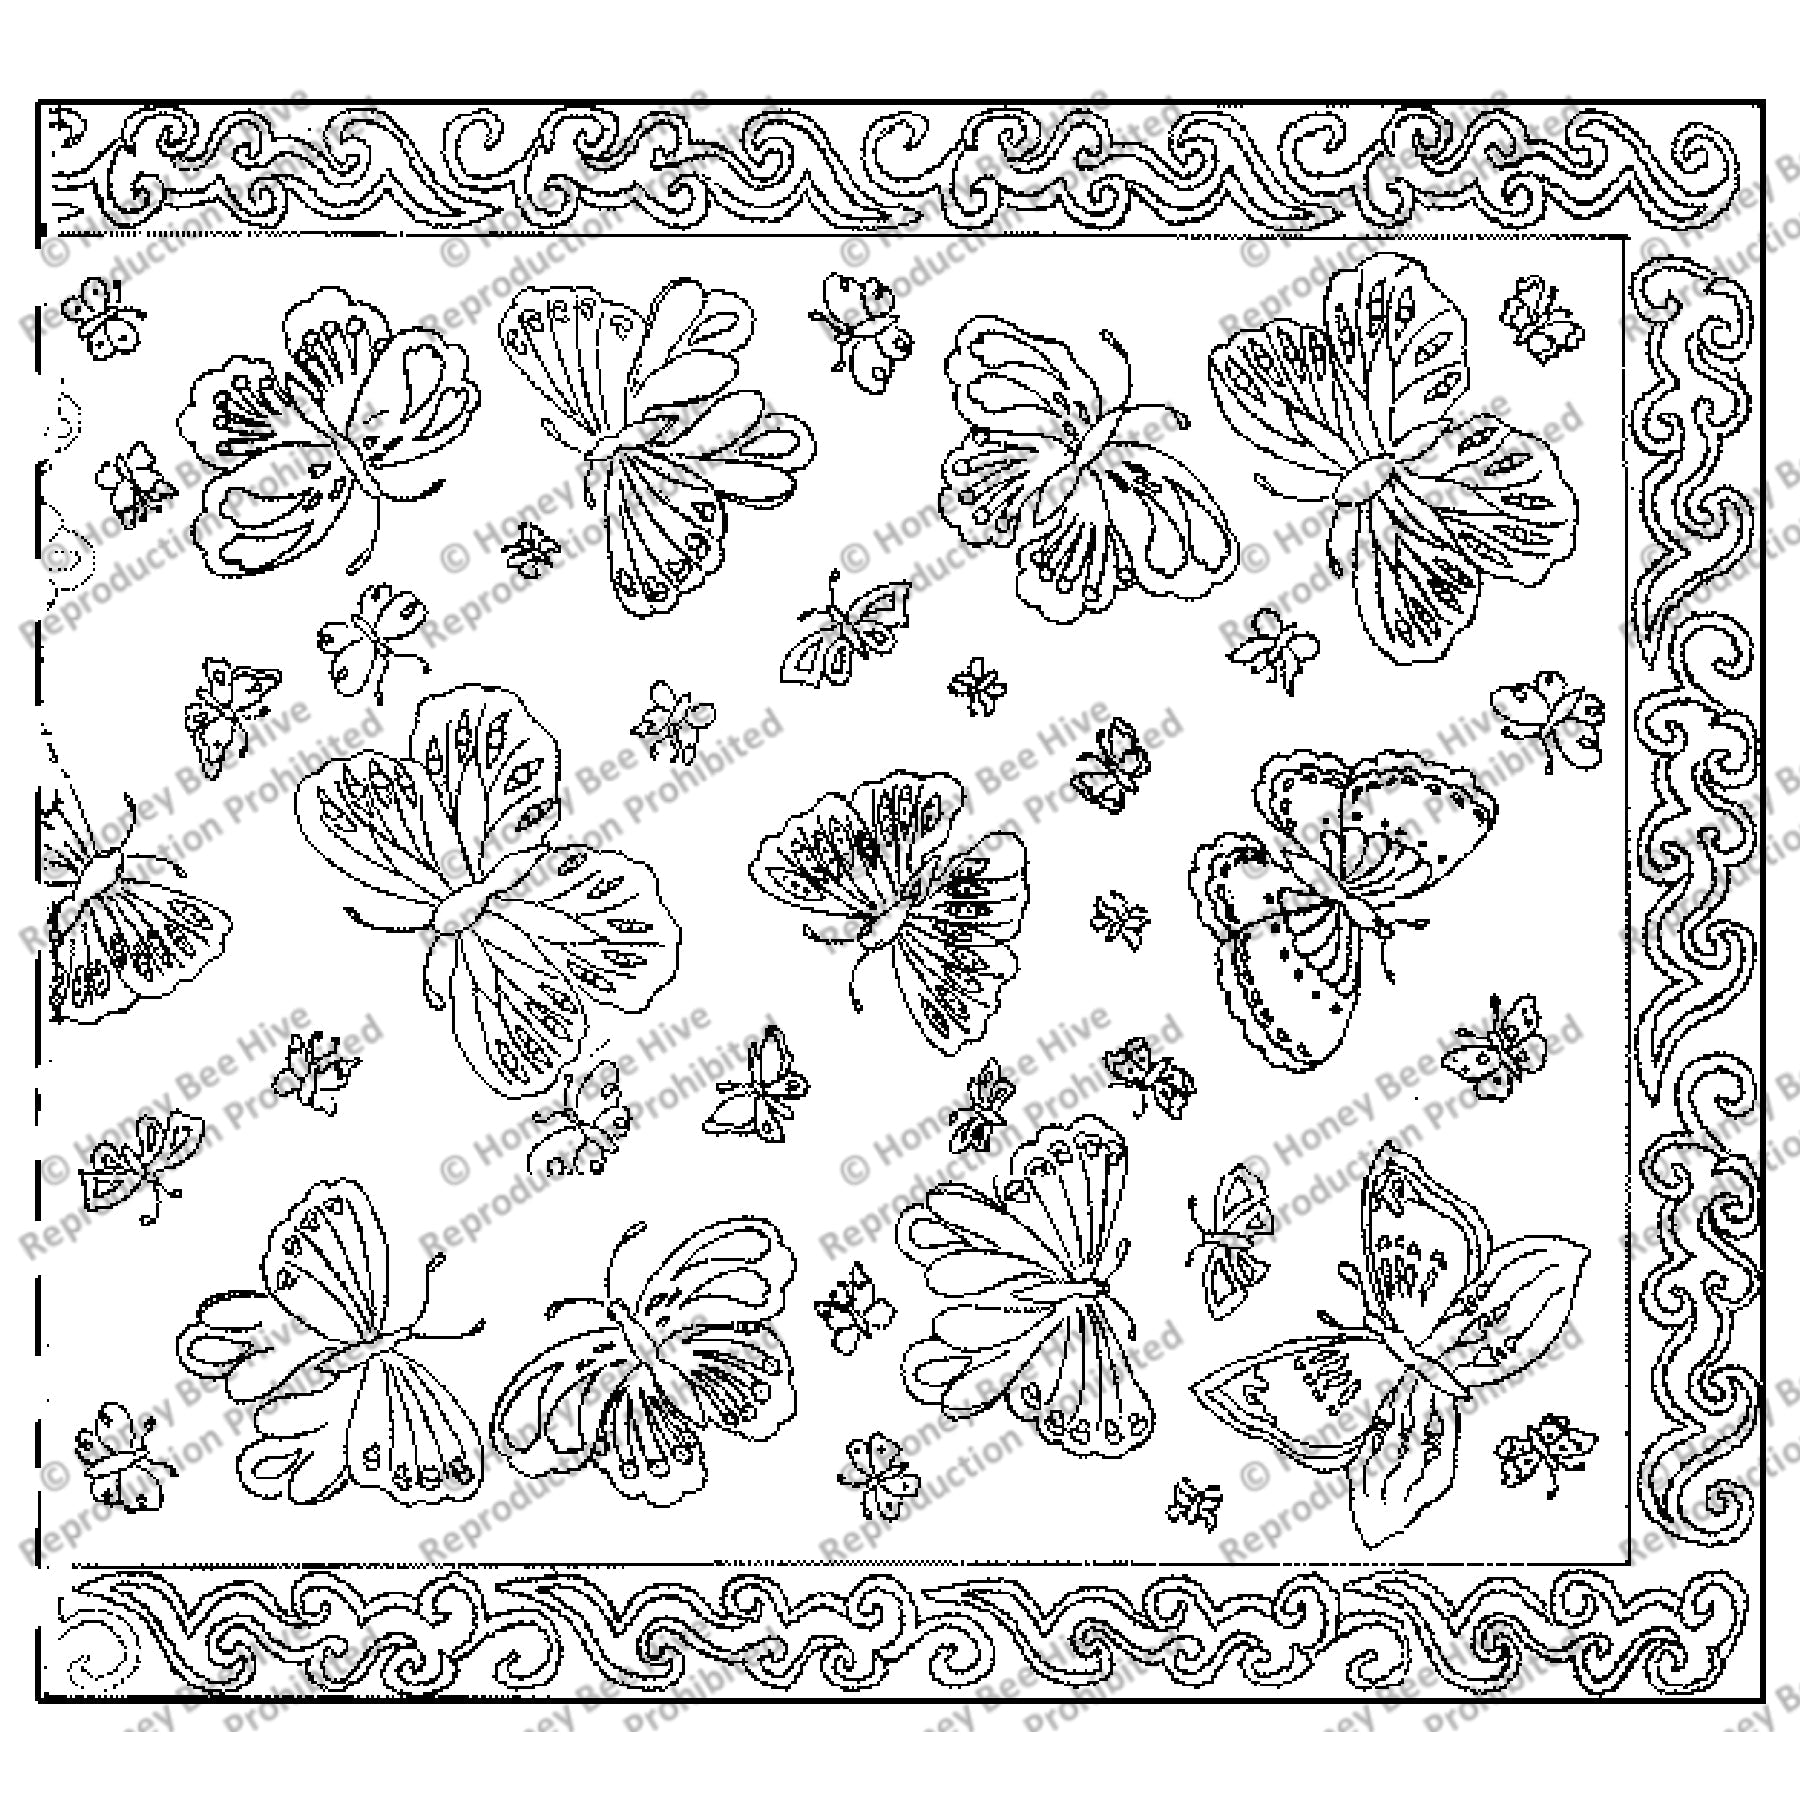 Chinese Butterflies, rug hooking pattern